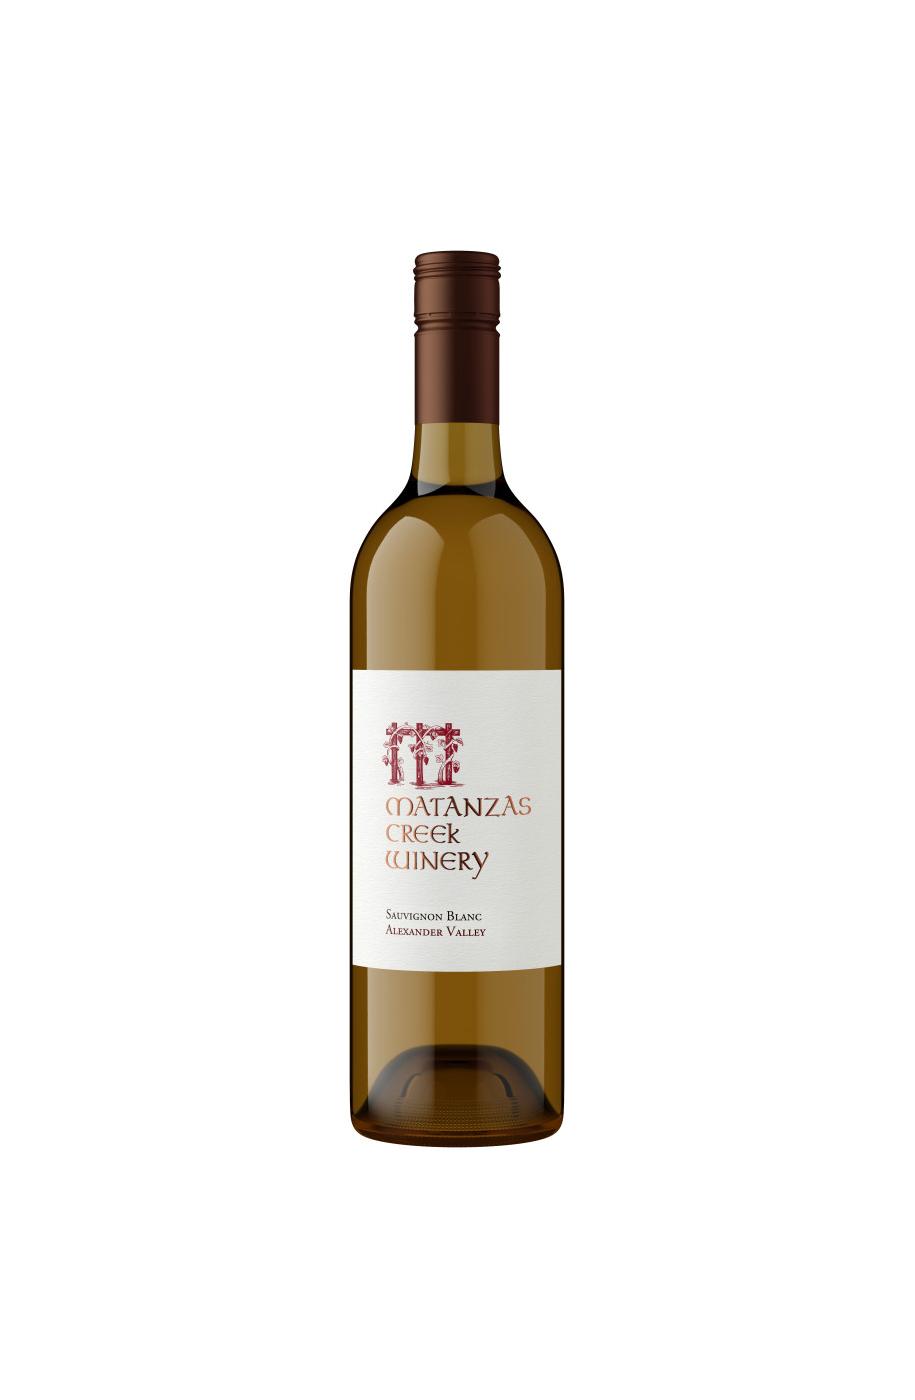 Matanzas Creek Alexander Valley Sauvignon Blanc Wine; image 1 of 2